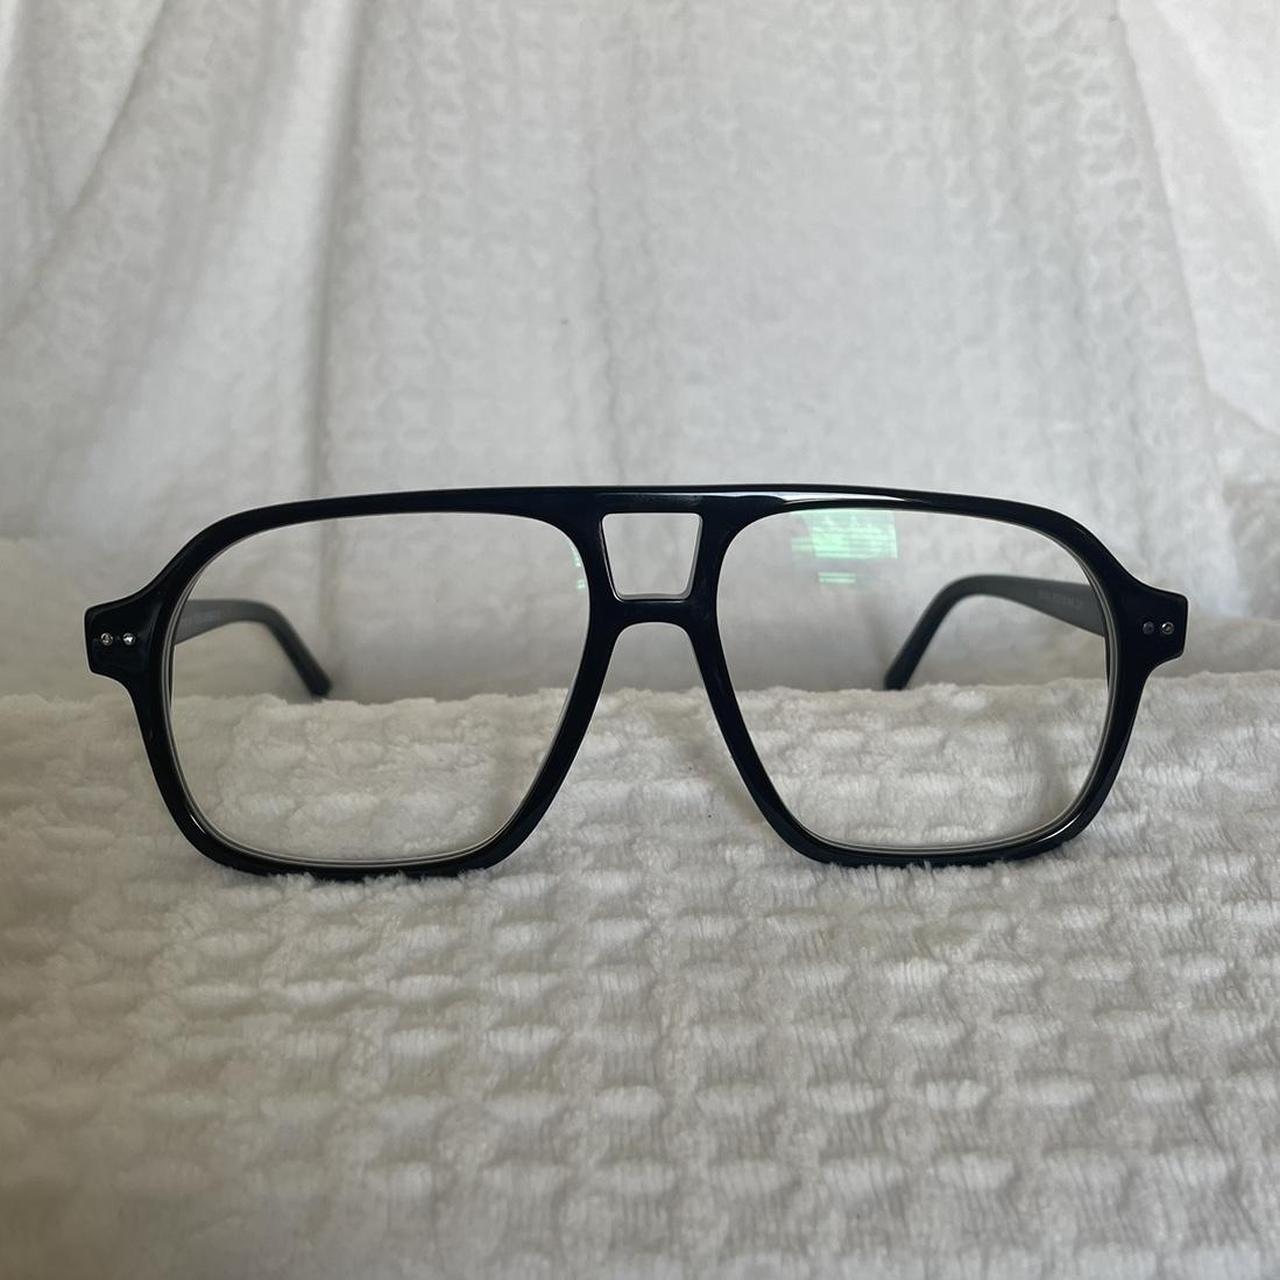 Cooolest Driving Eyeglasses For reading signs far... - Depop